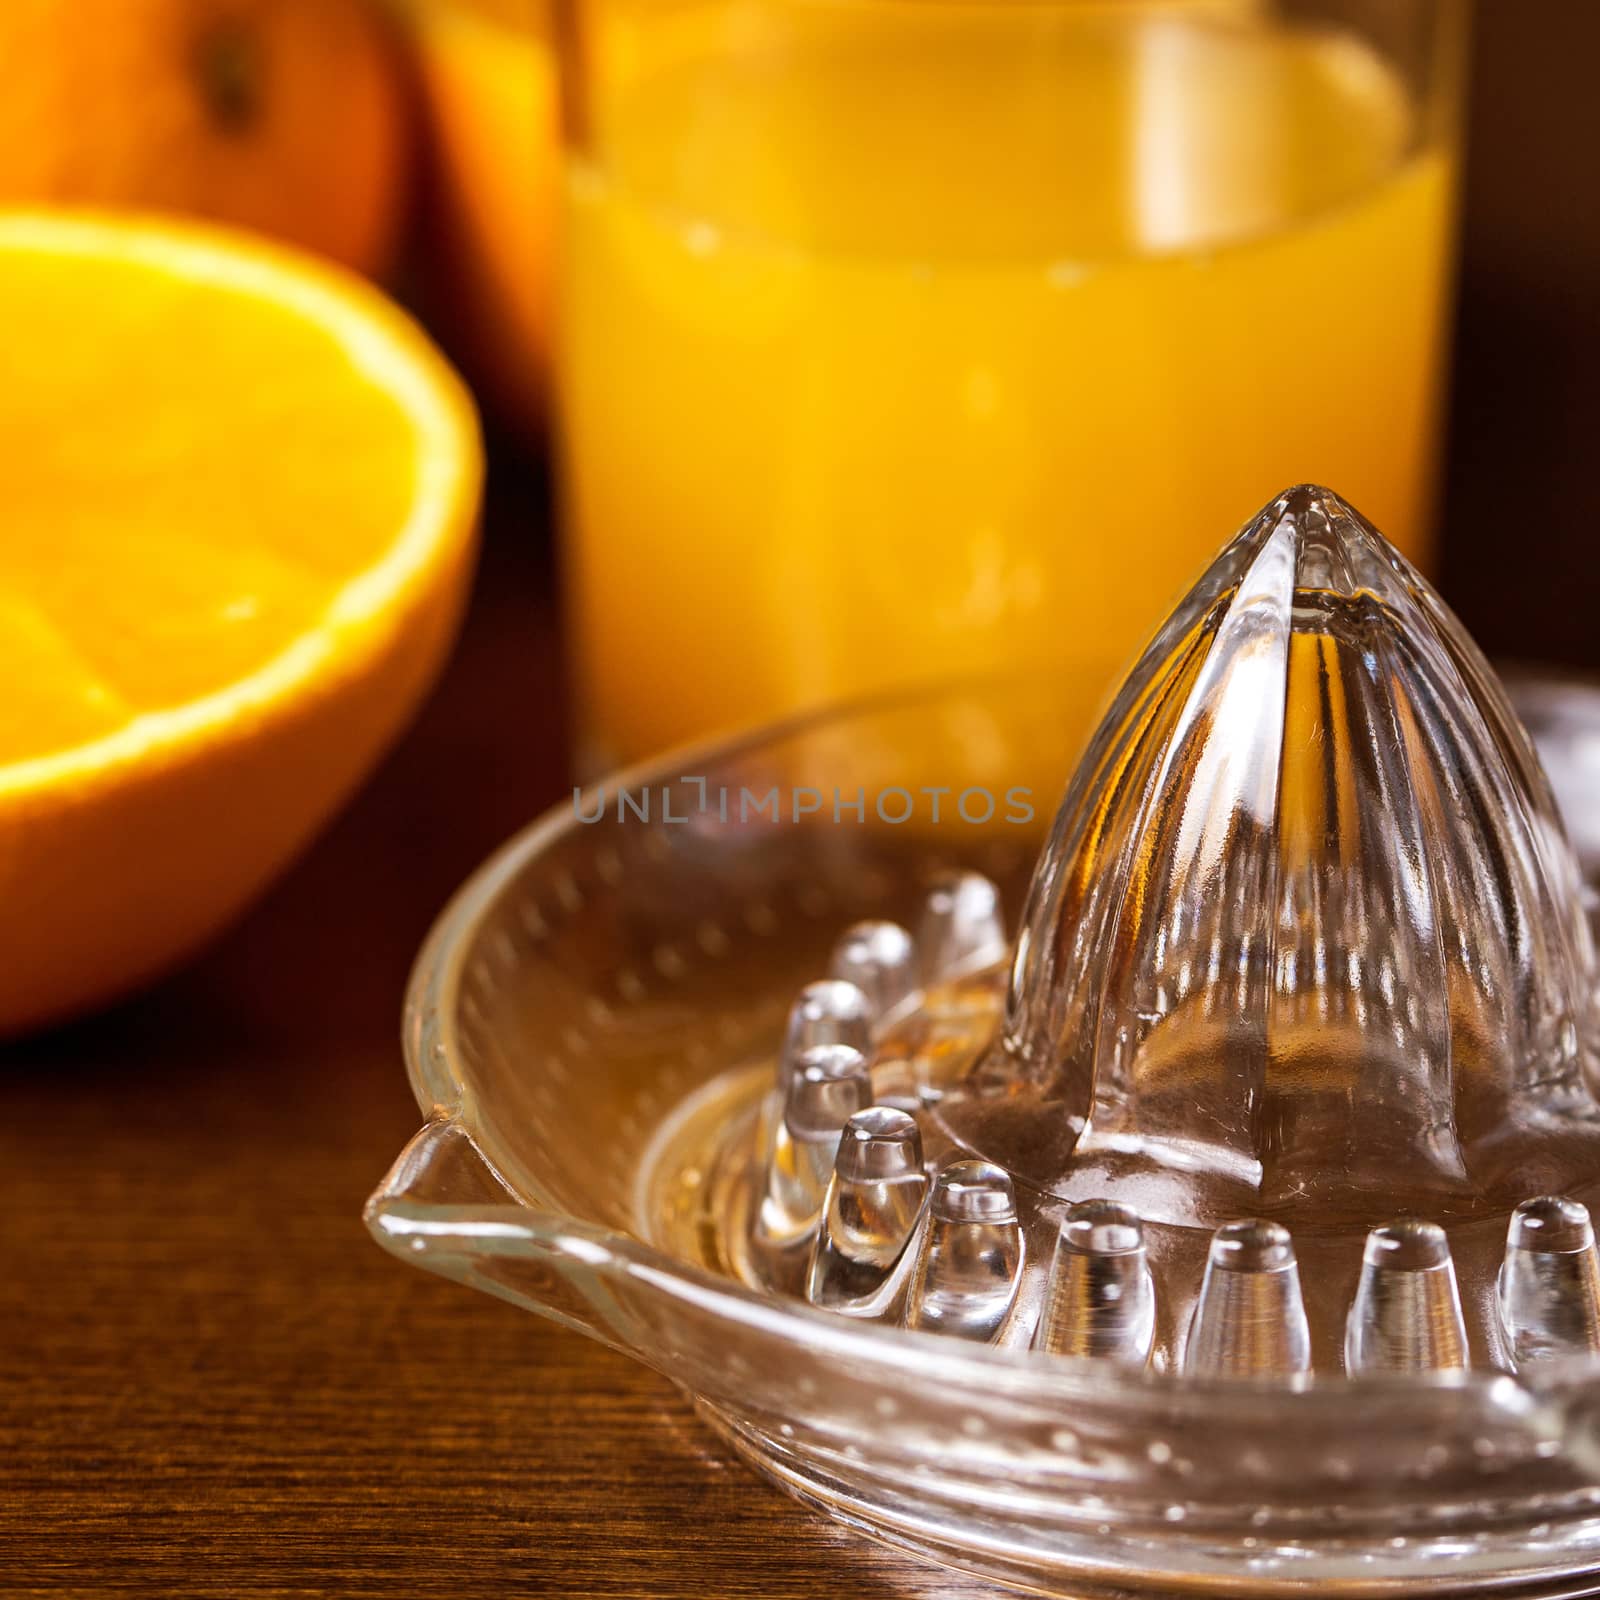 Oranges and its juice by rufatjumali